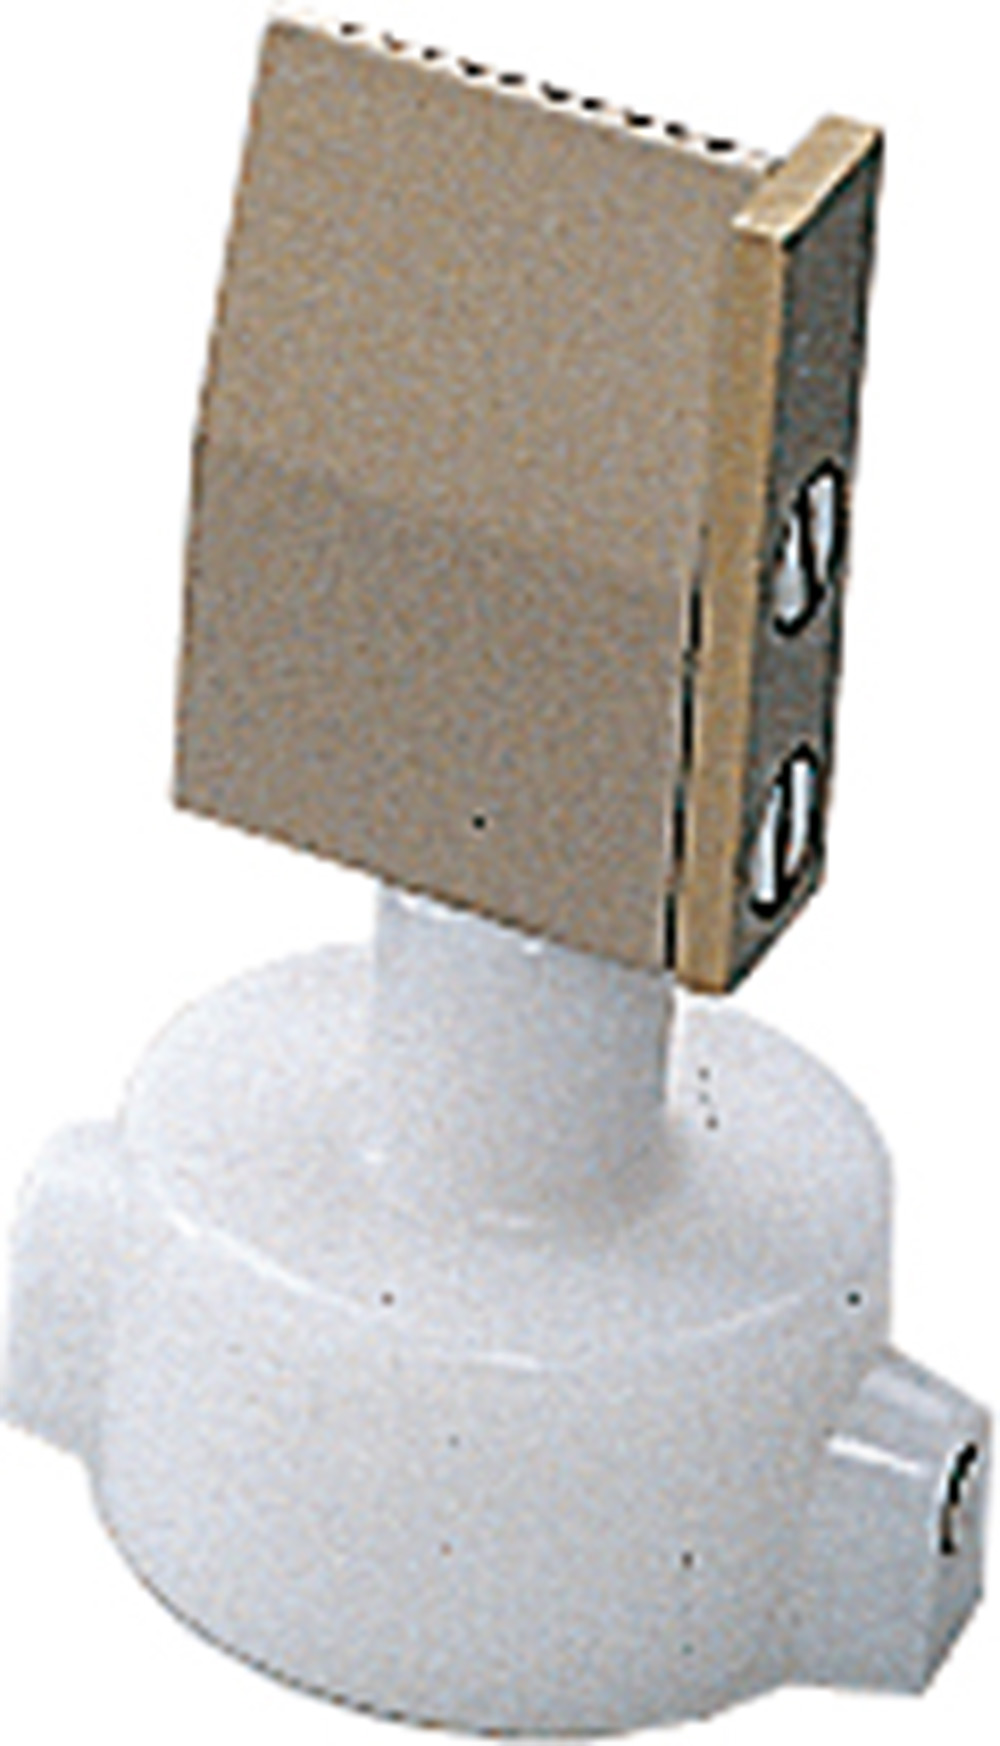 Kantenleimdüse 10 - 22 mm verstellbar - für Lamello Leimauftragsgeräte LK